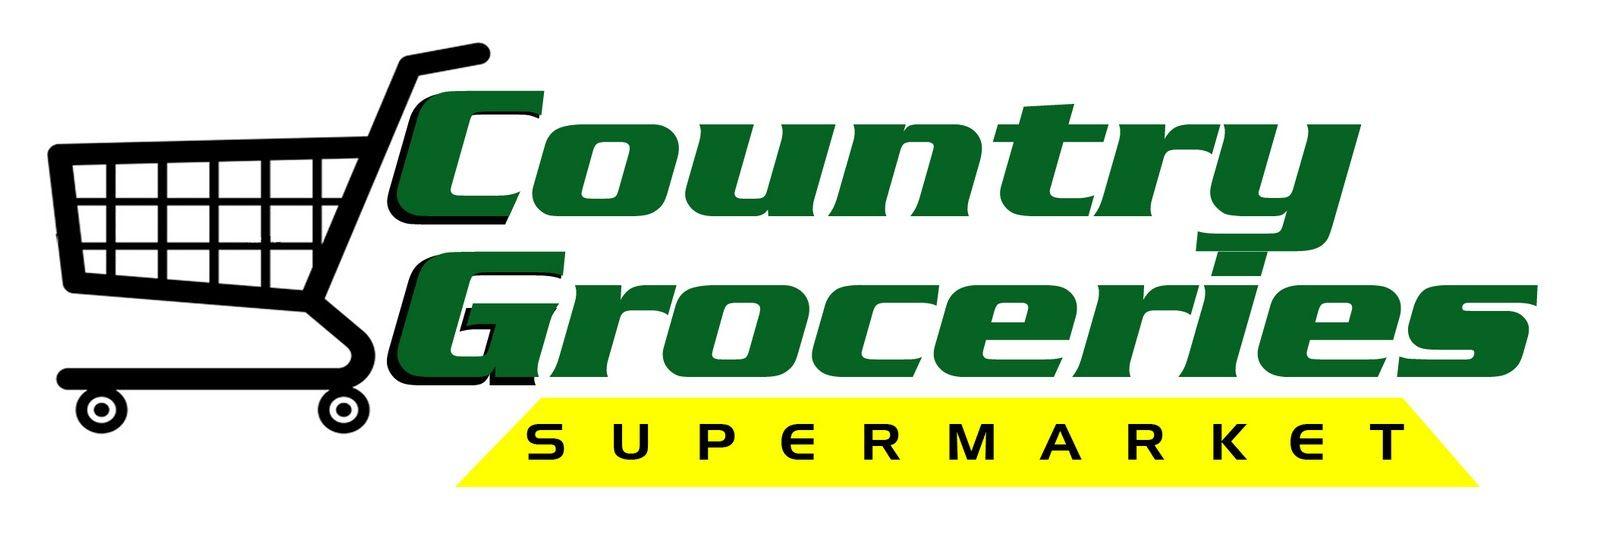 Yellow and Green Supermarket Logo - Supermarket Logos